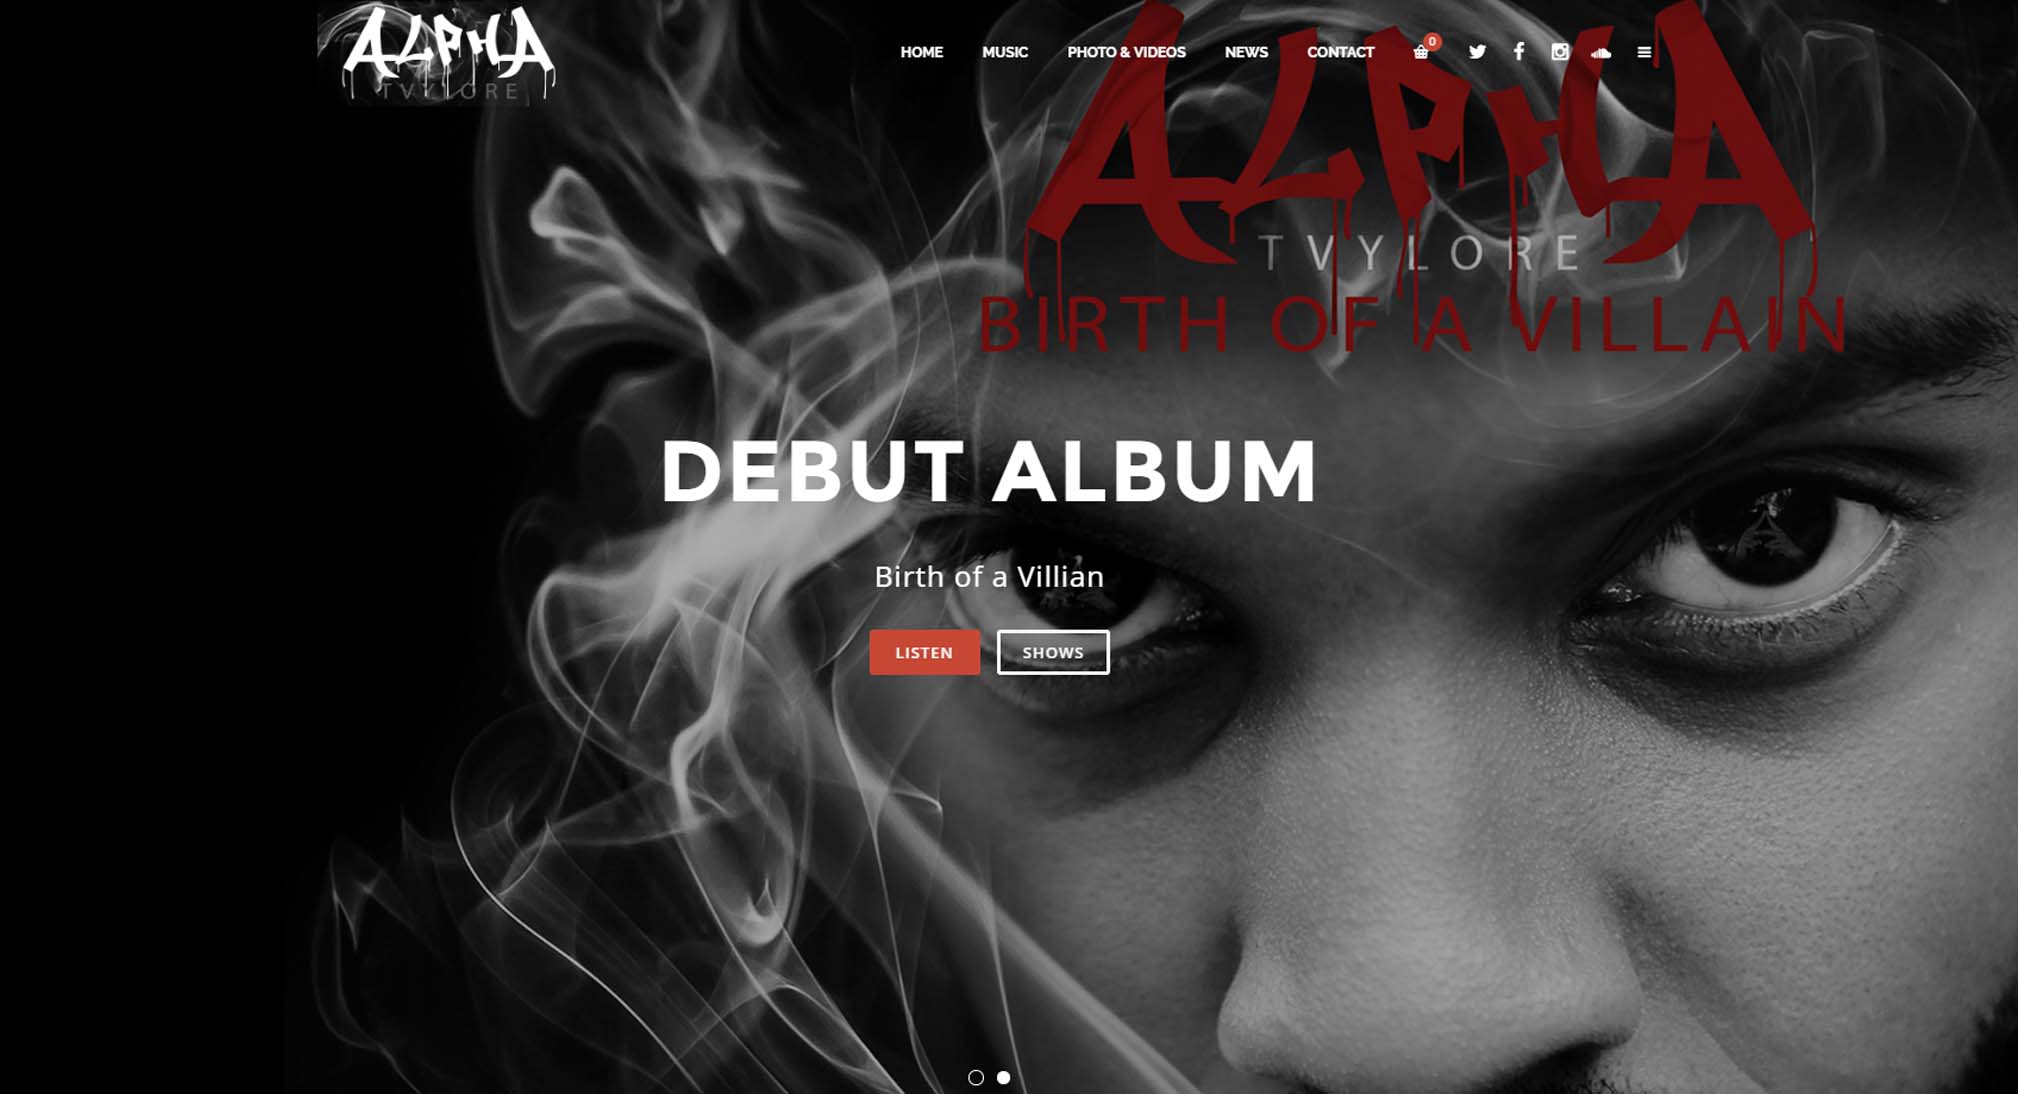 Alpha Tvylore website design and development home page